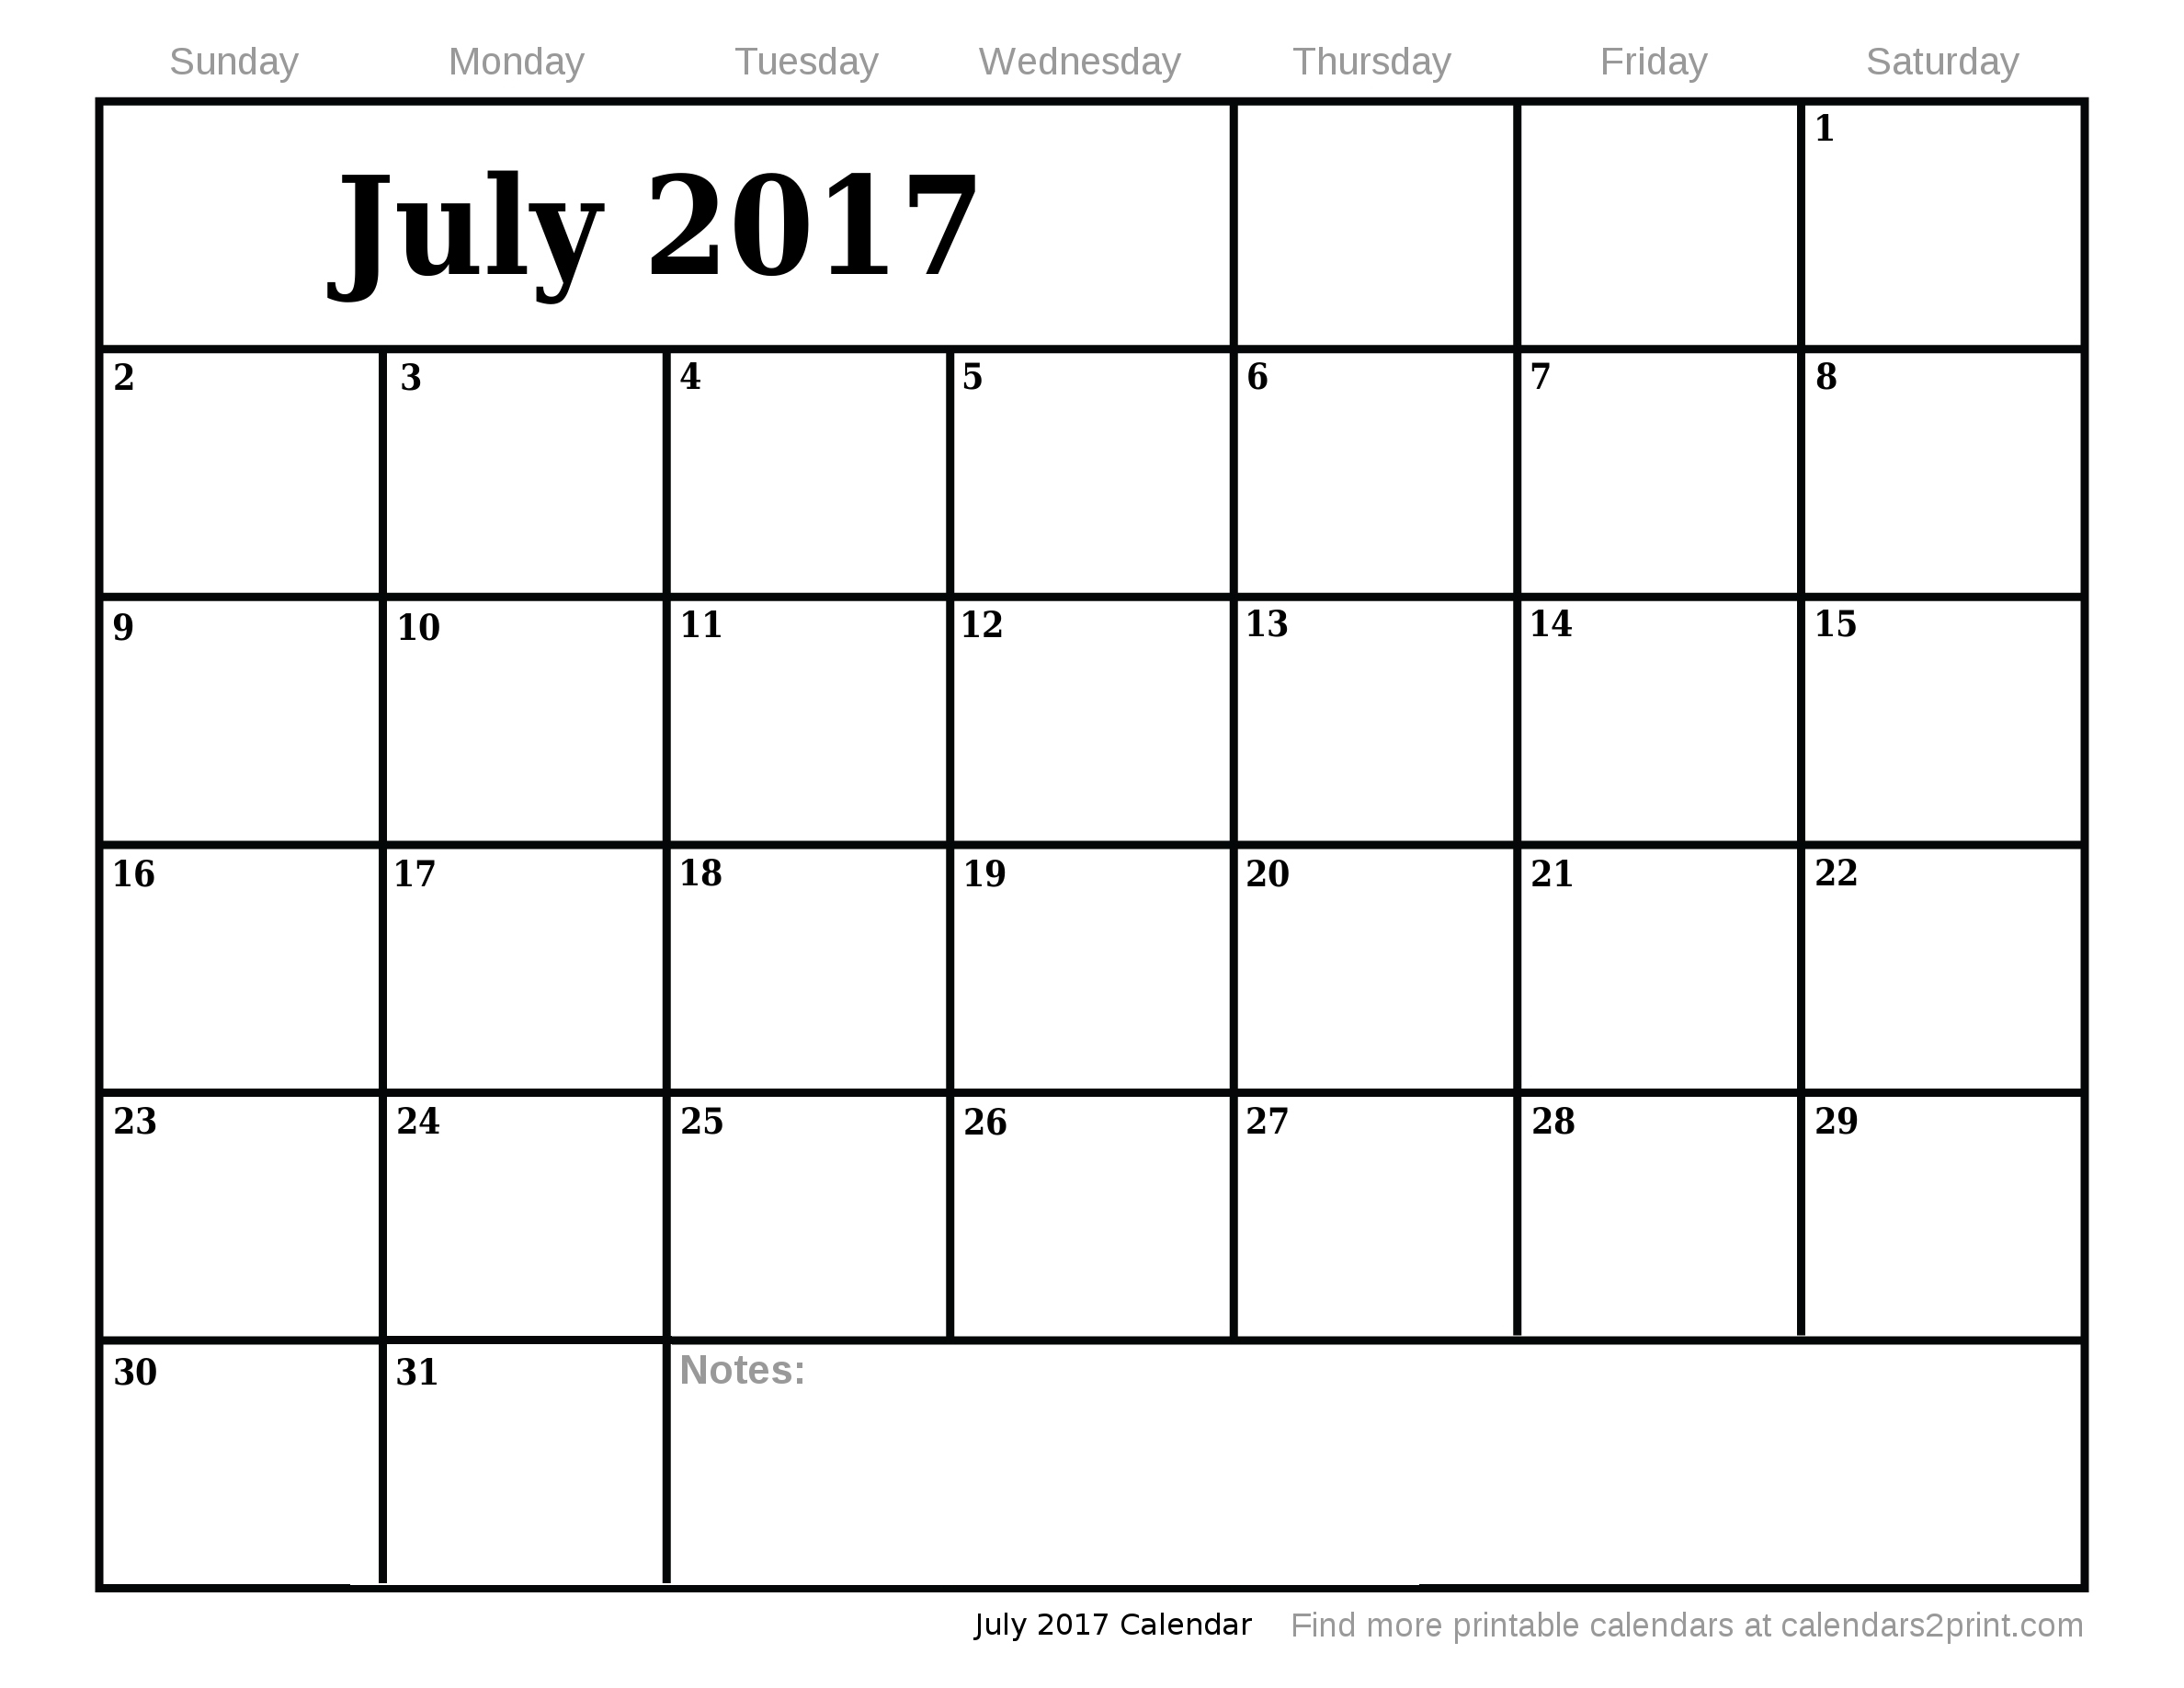 Jul 2017 Printable Calendar